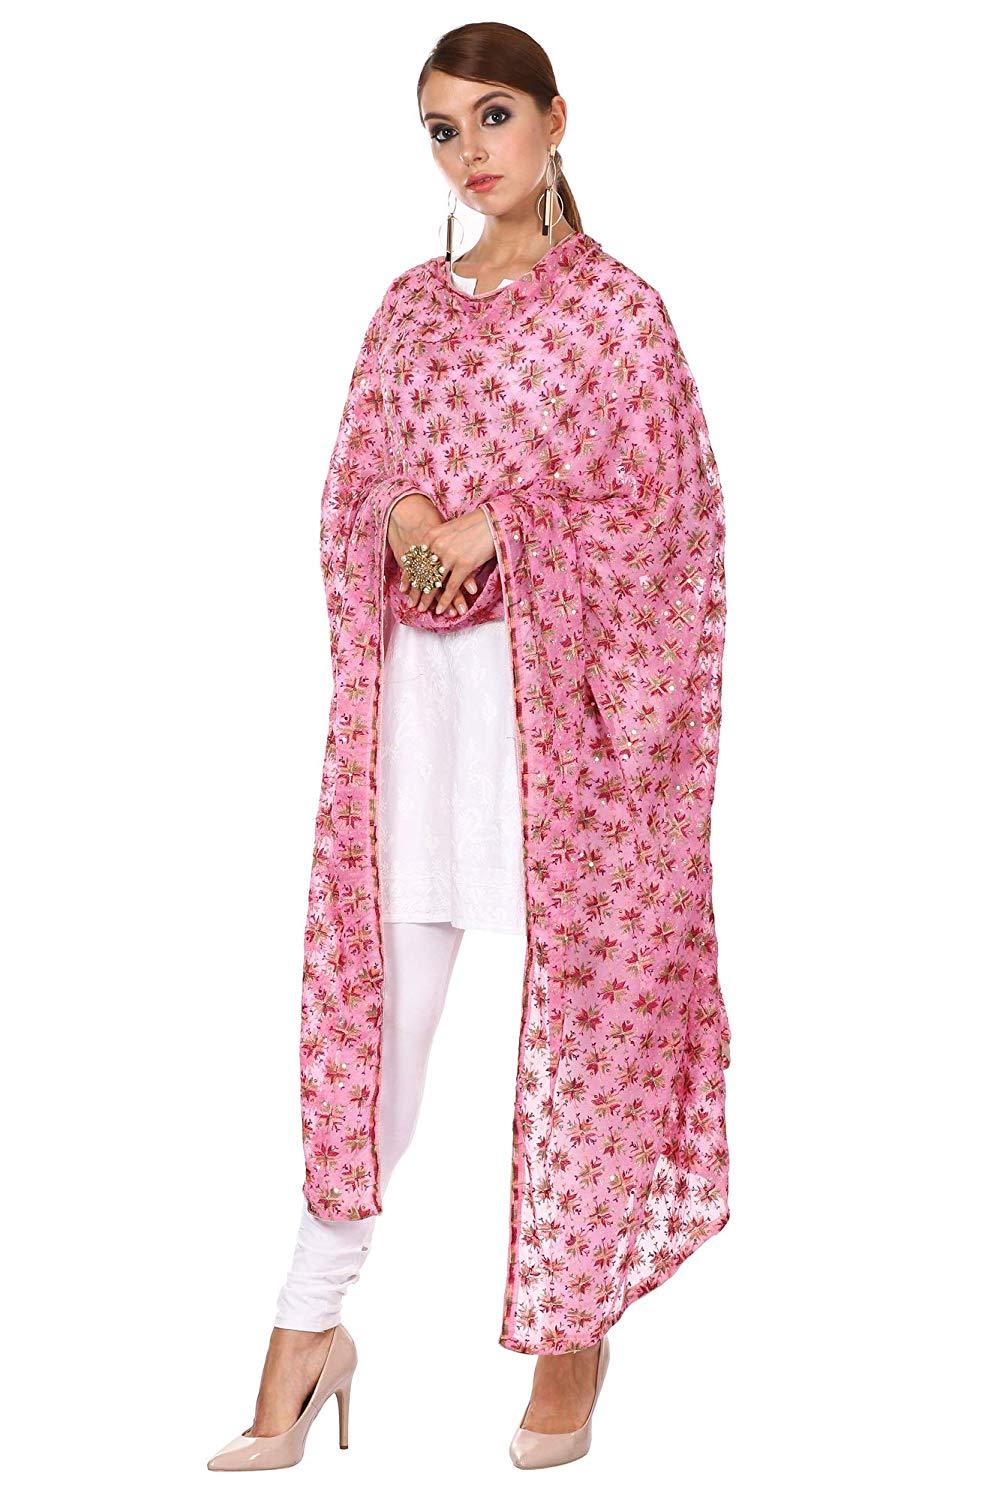 Pashtush Womens Chiffon Dupatta, Light Pink With Multicoloured Embroidery, Light Weight